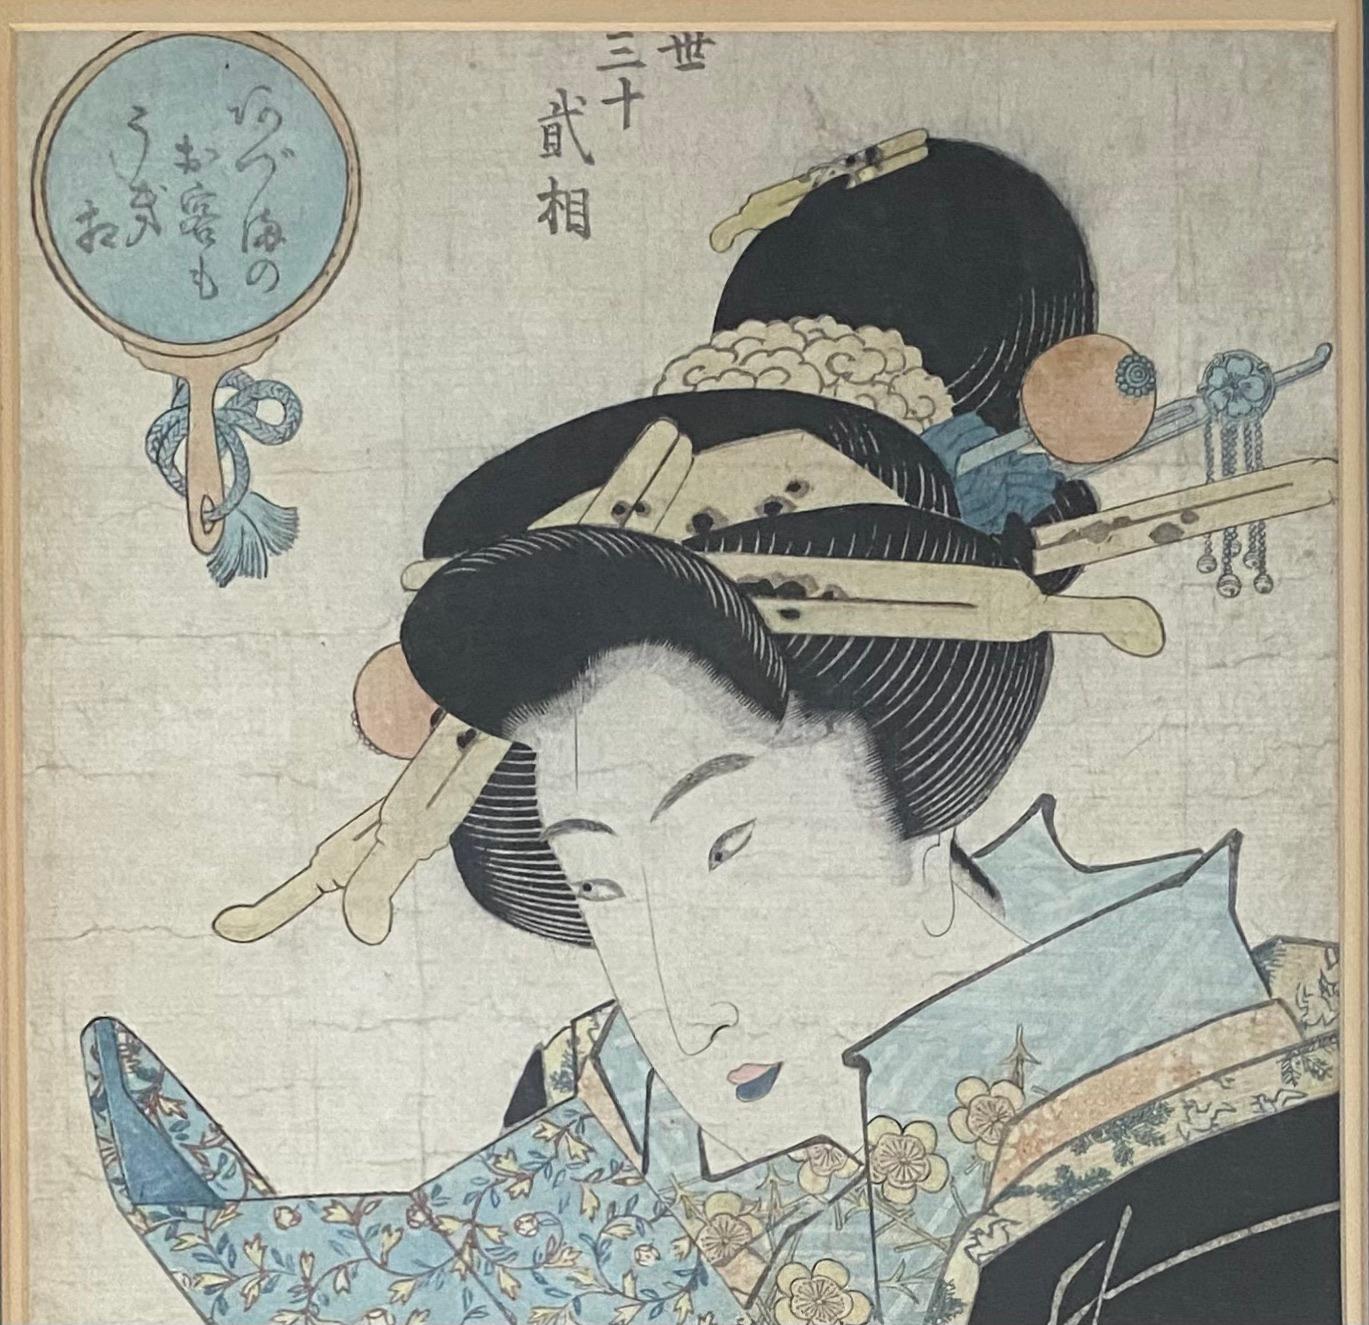 Pair of 19th Century Antique Japanese Woodblocks Prints Attrib. to Keisai Eisen For Sale 2